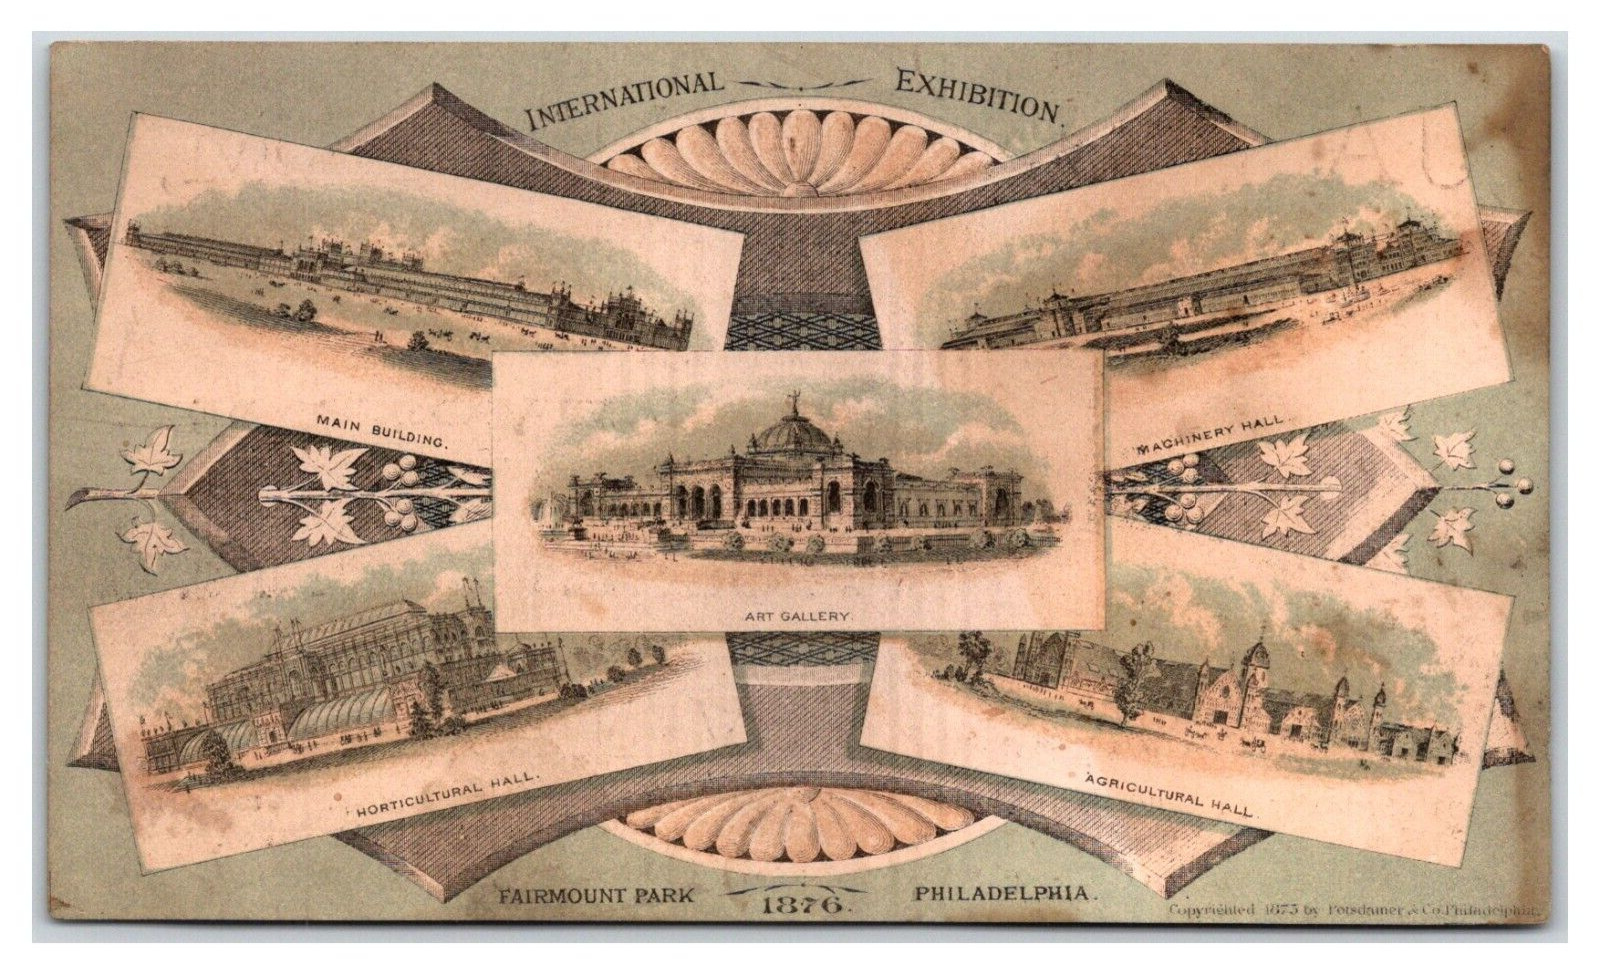 1876 International Exhibition Fairmount Park Philadelphia Card w Buildings Halls